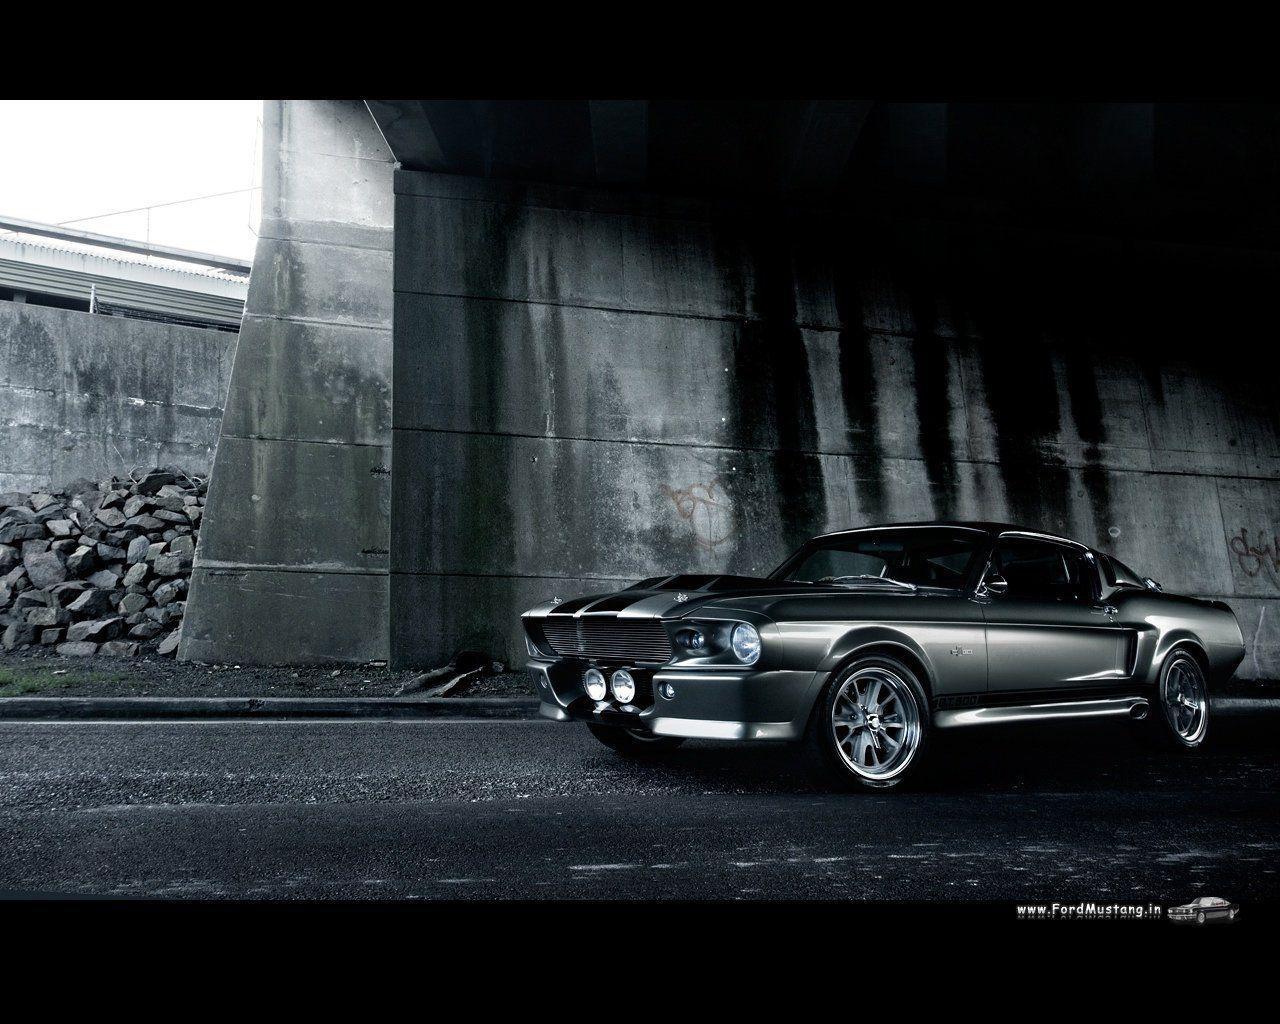 Mustang Shelby Gt500 Eleanor 2013 DxRENFfc.com